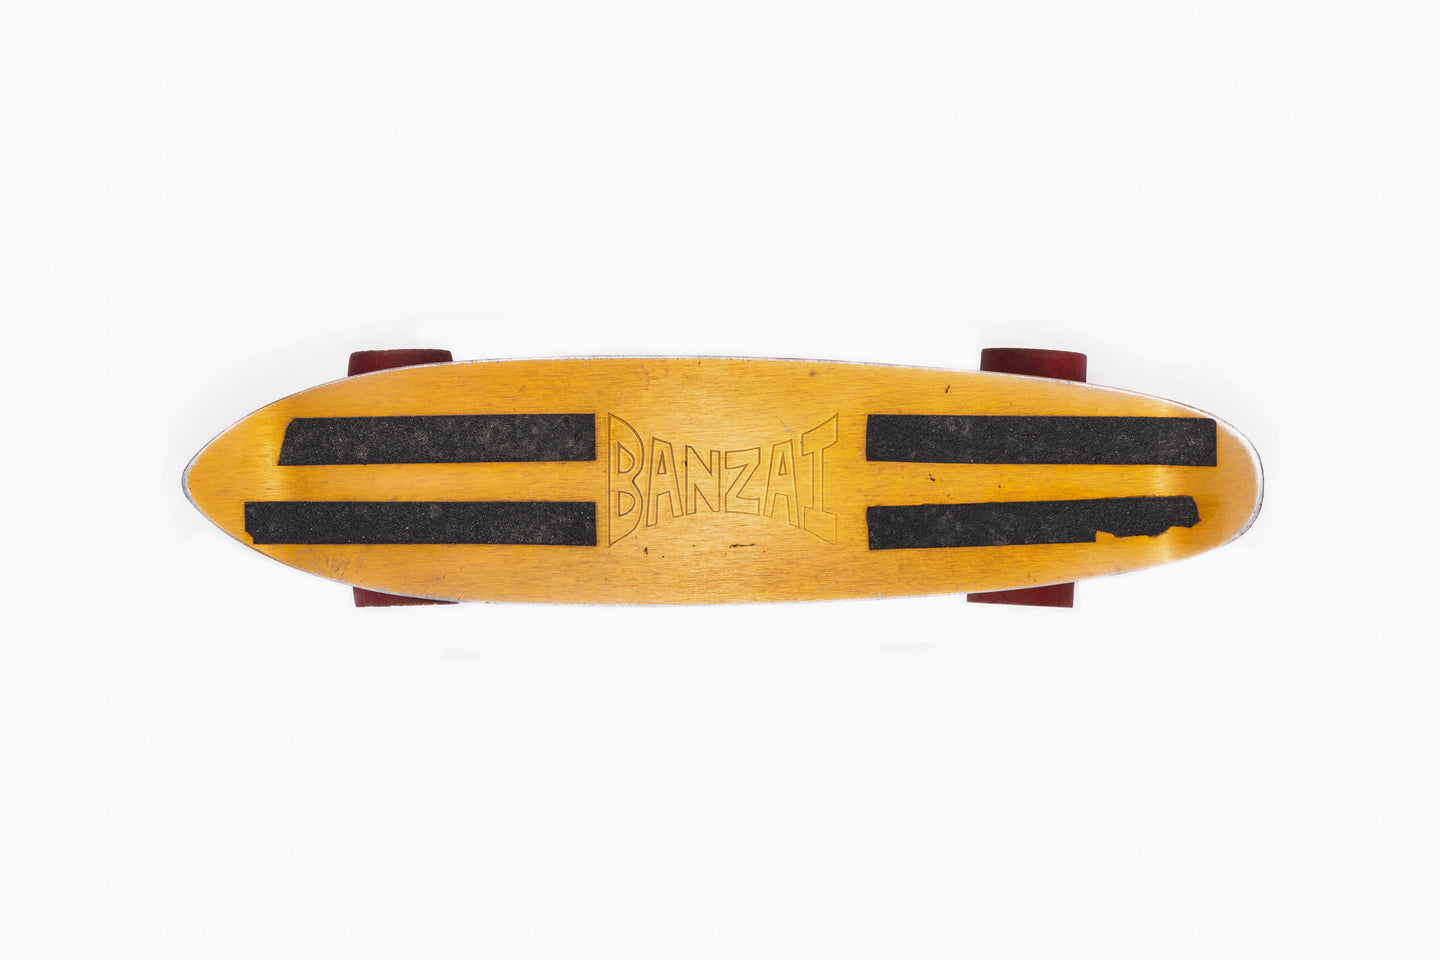 Original Banzai Skateboard from 1976